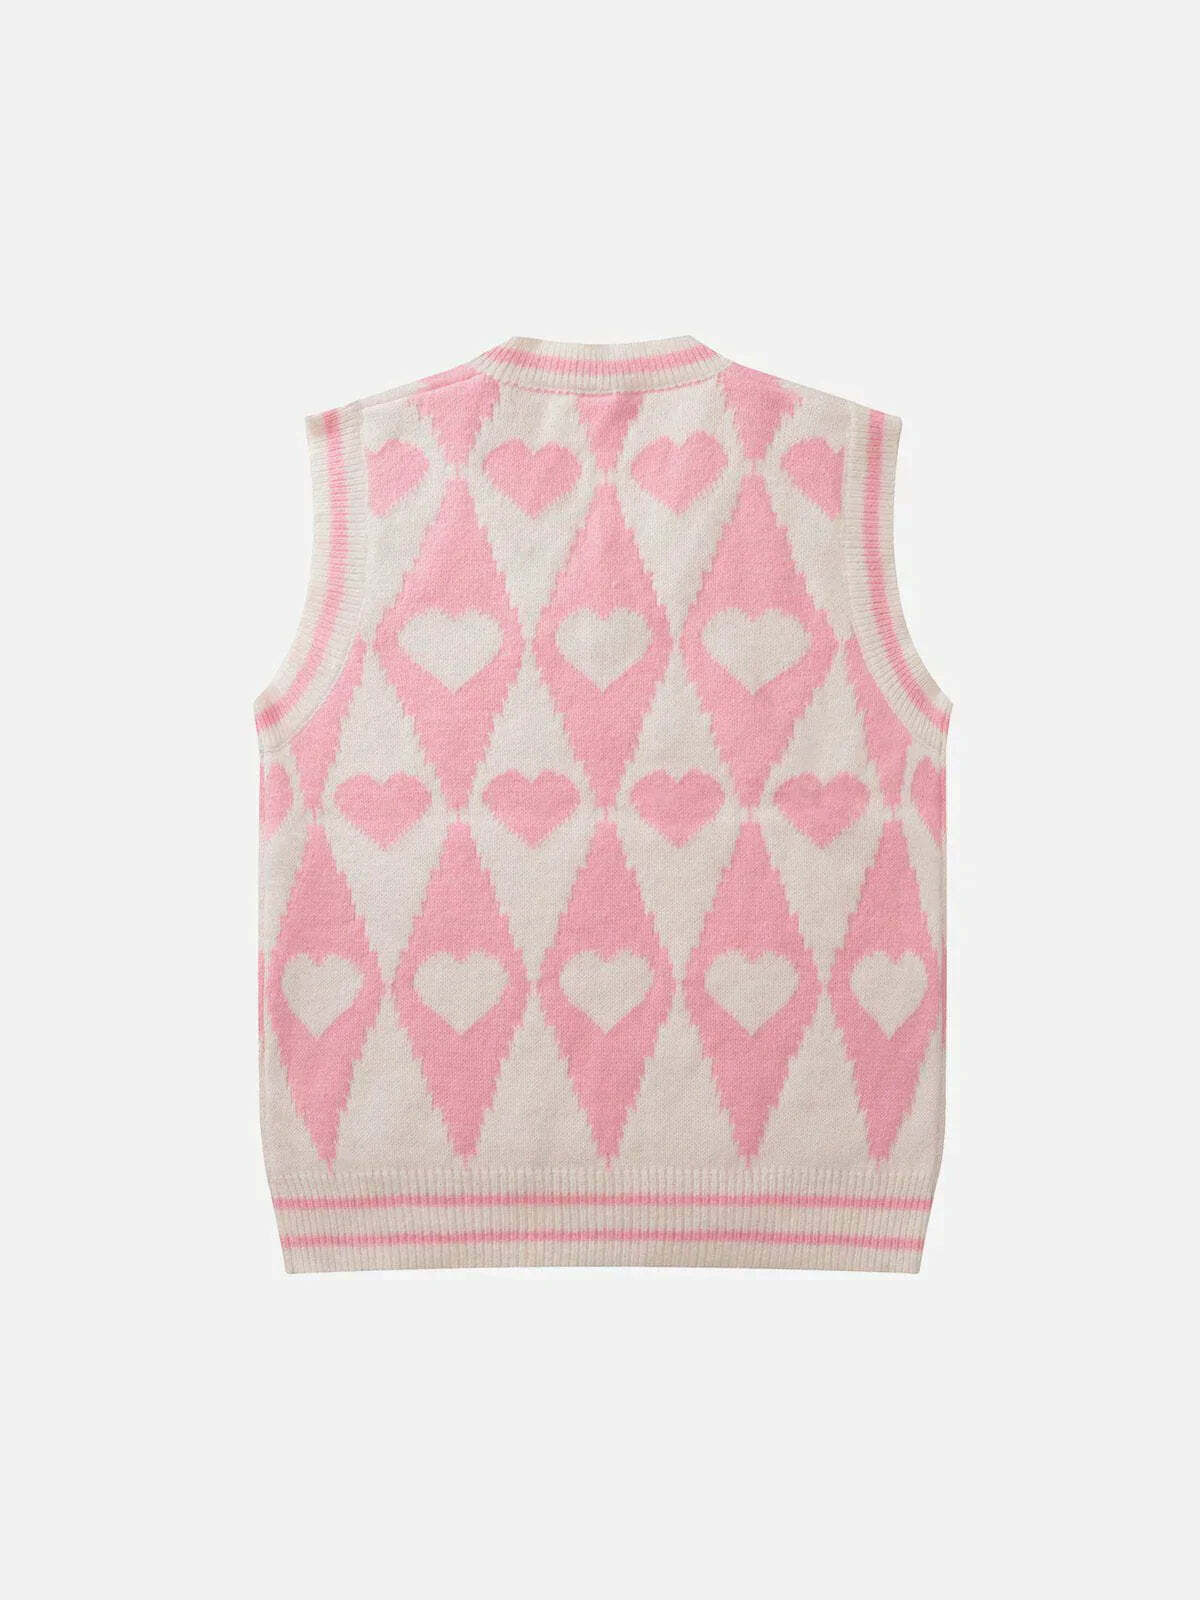 plaid love sweater vest retro quirky y2k style 5336